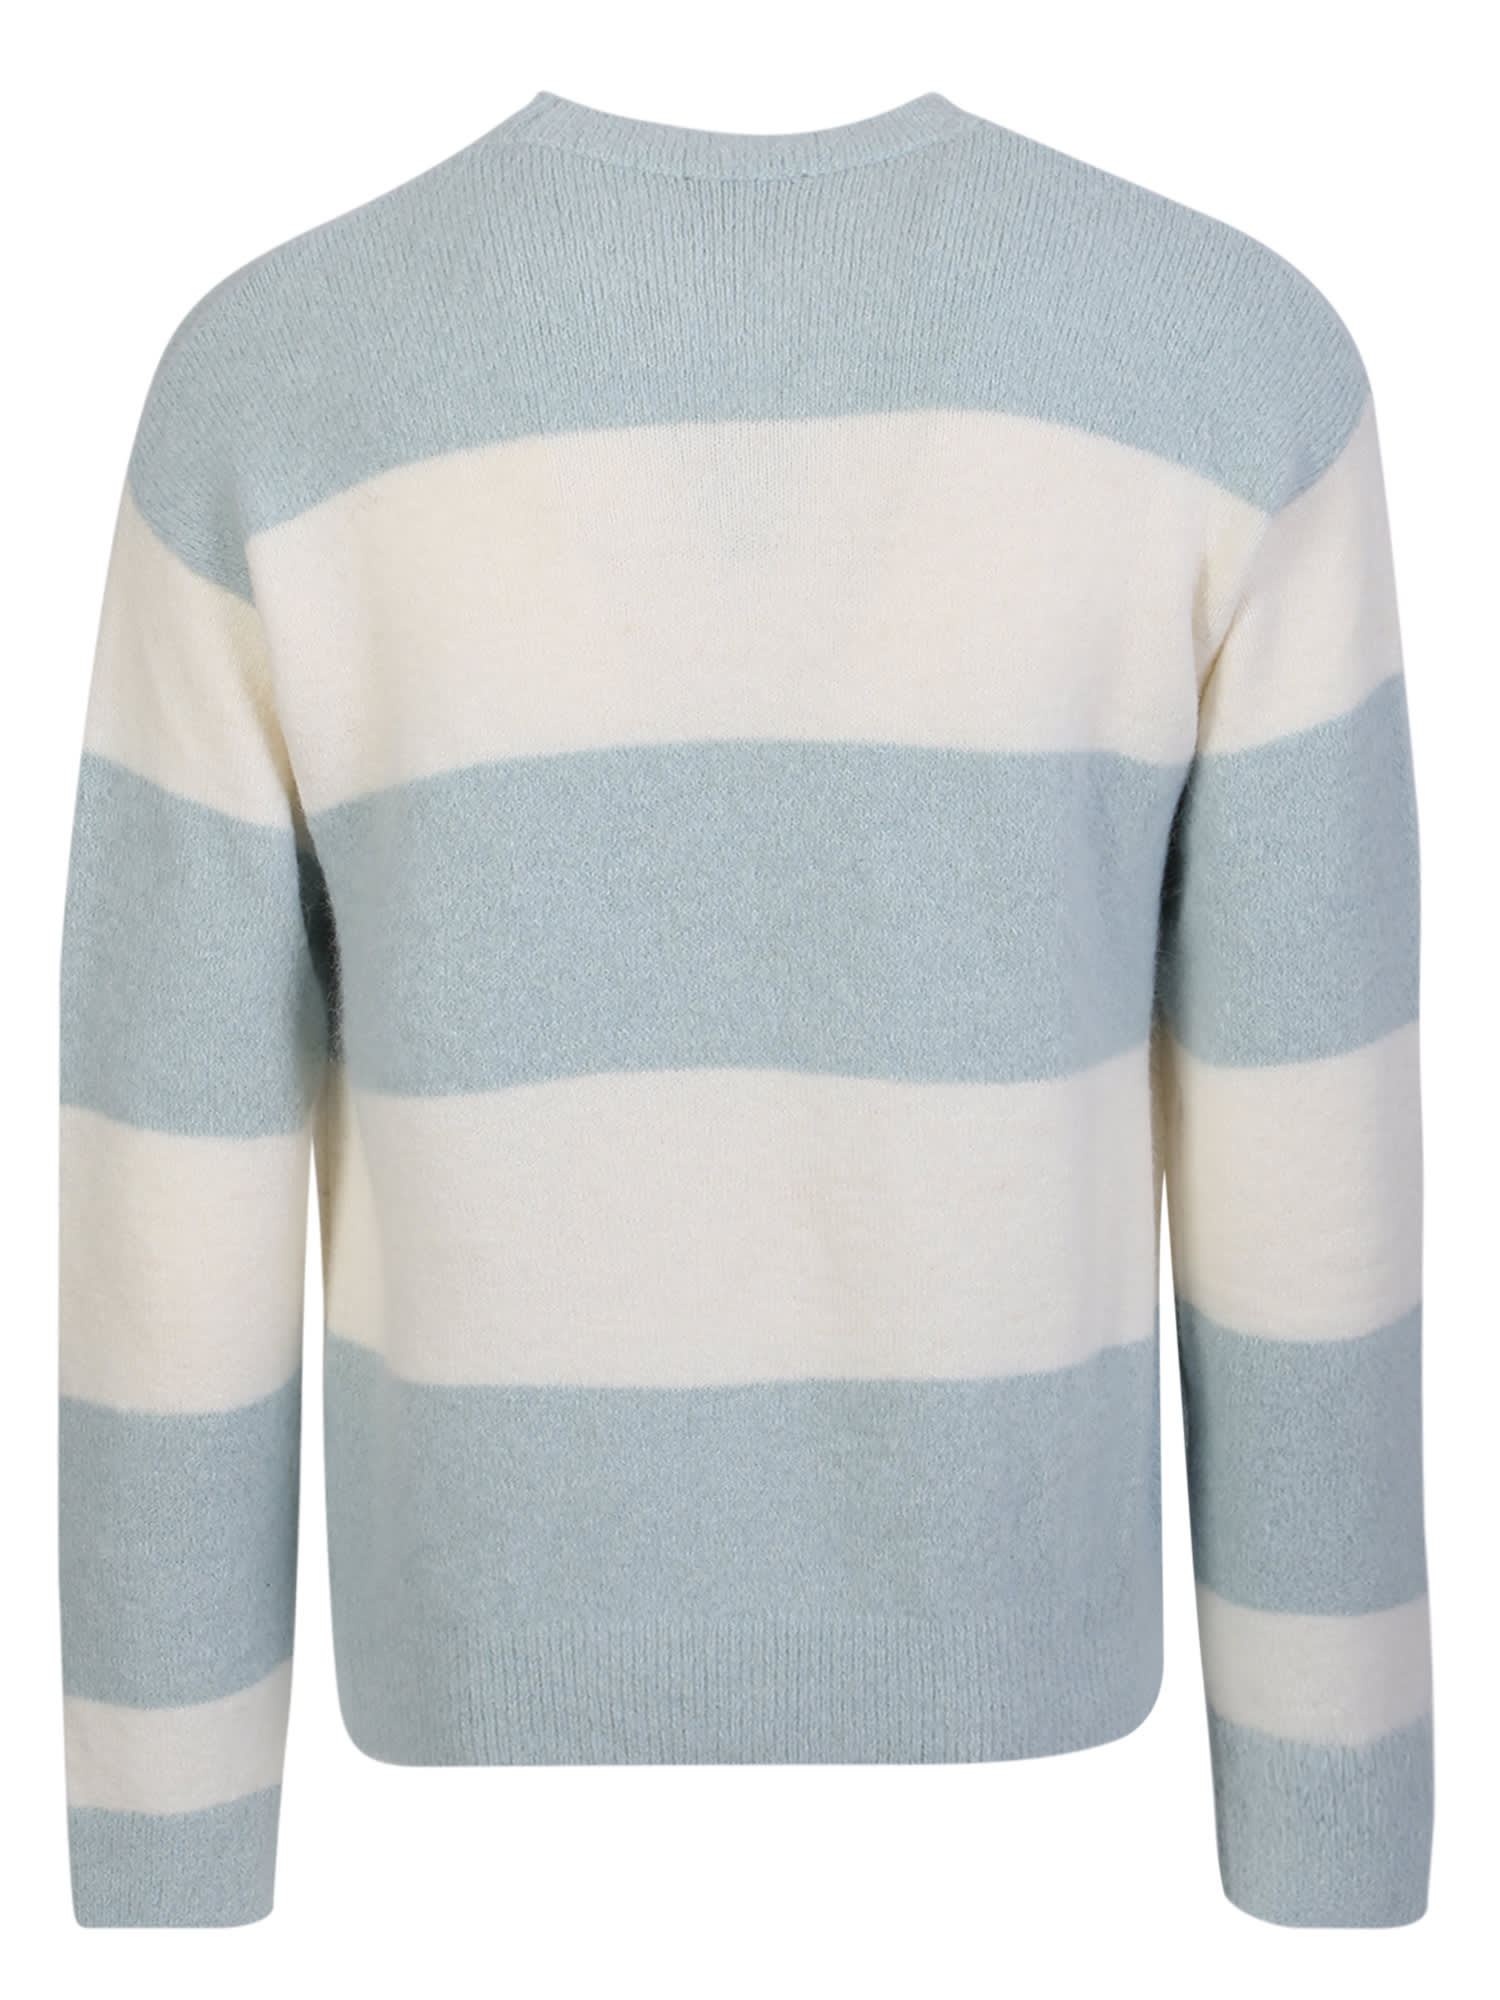 Shop Apc Striped Sky Blue/white Crewneck Sweater